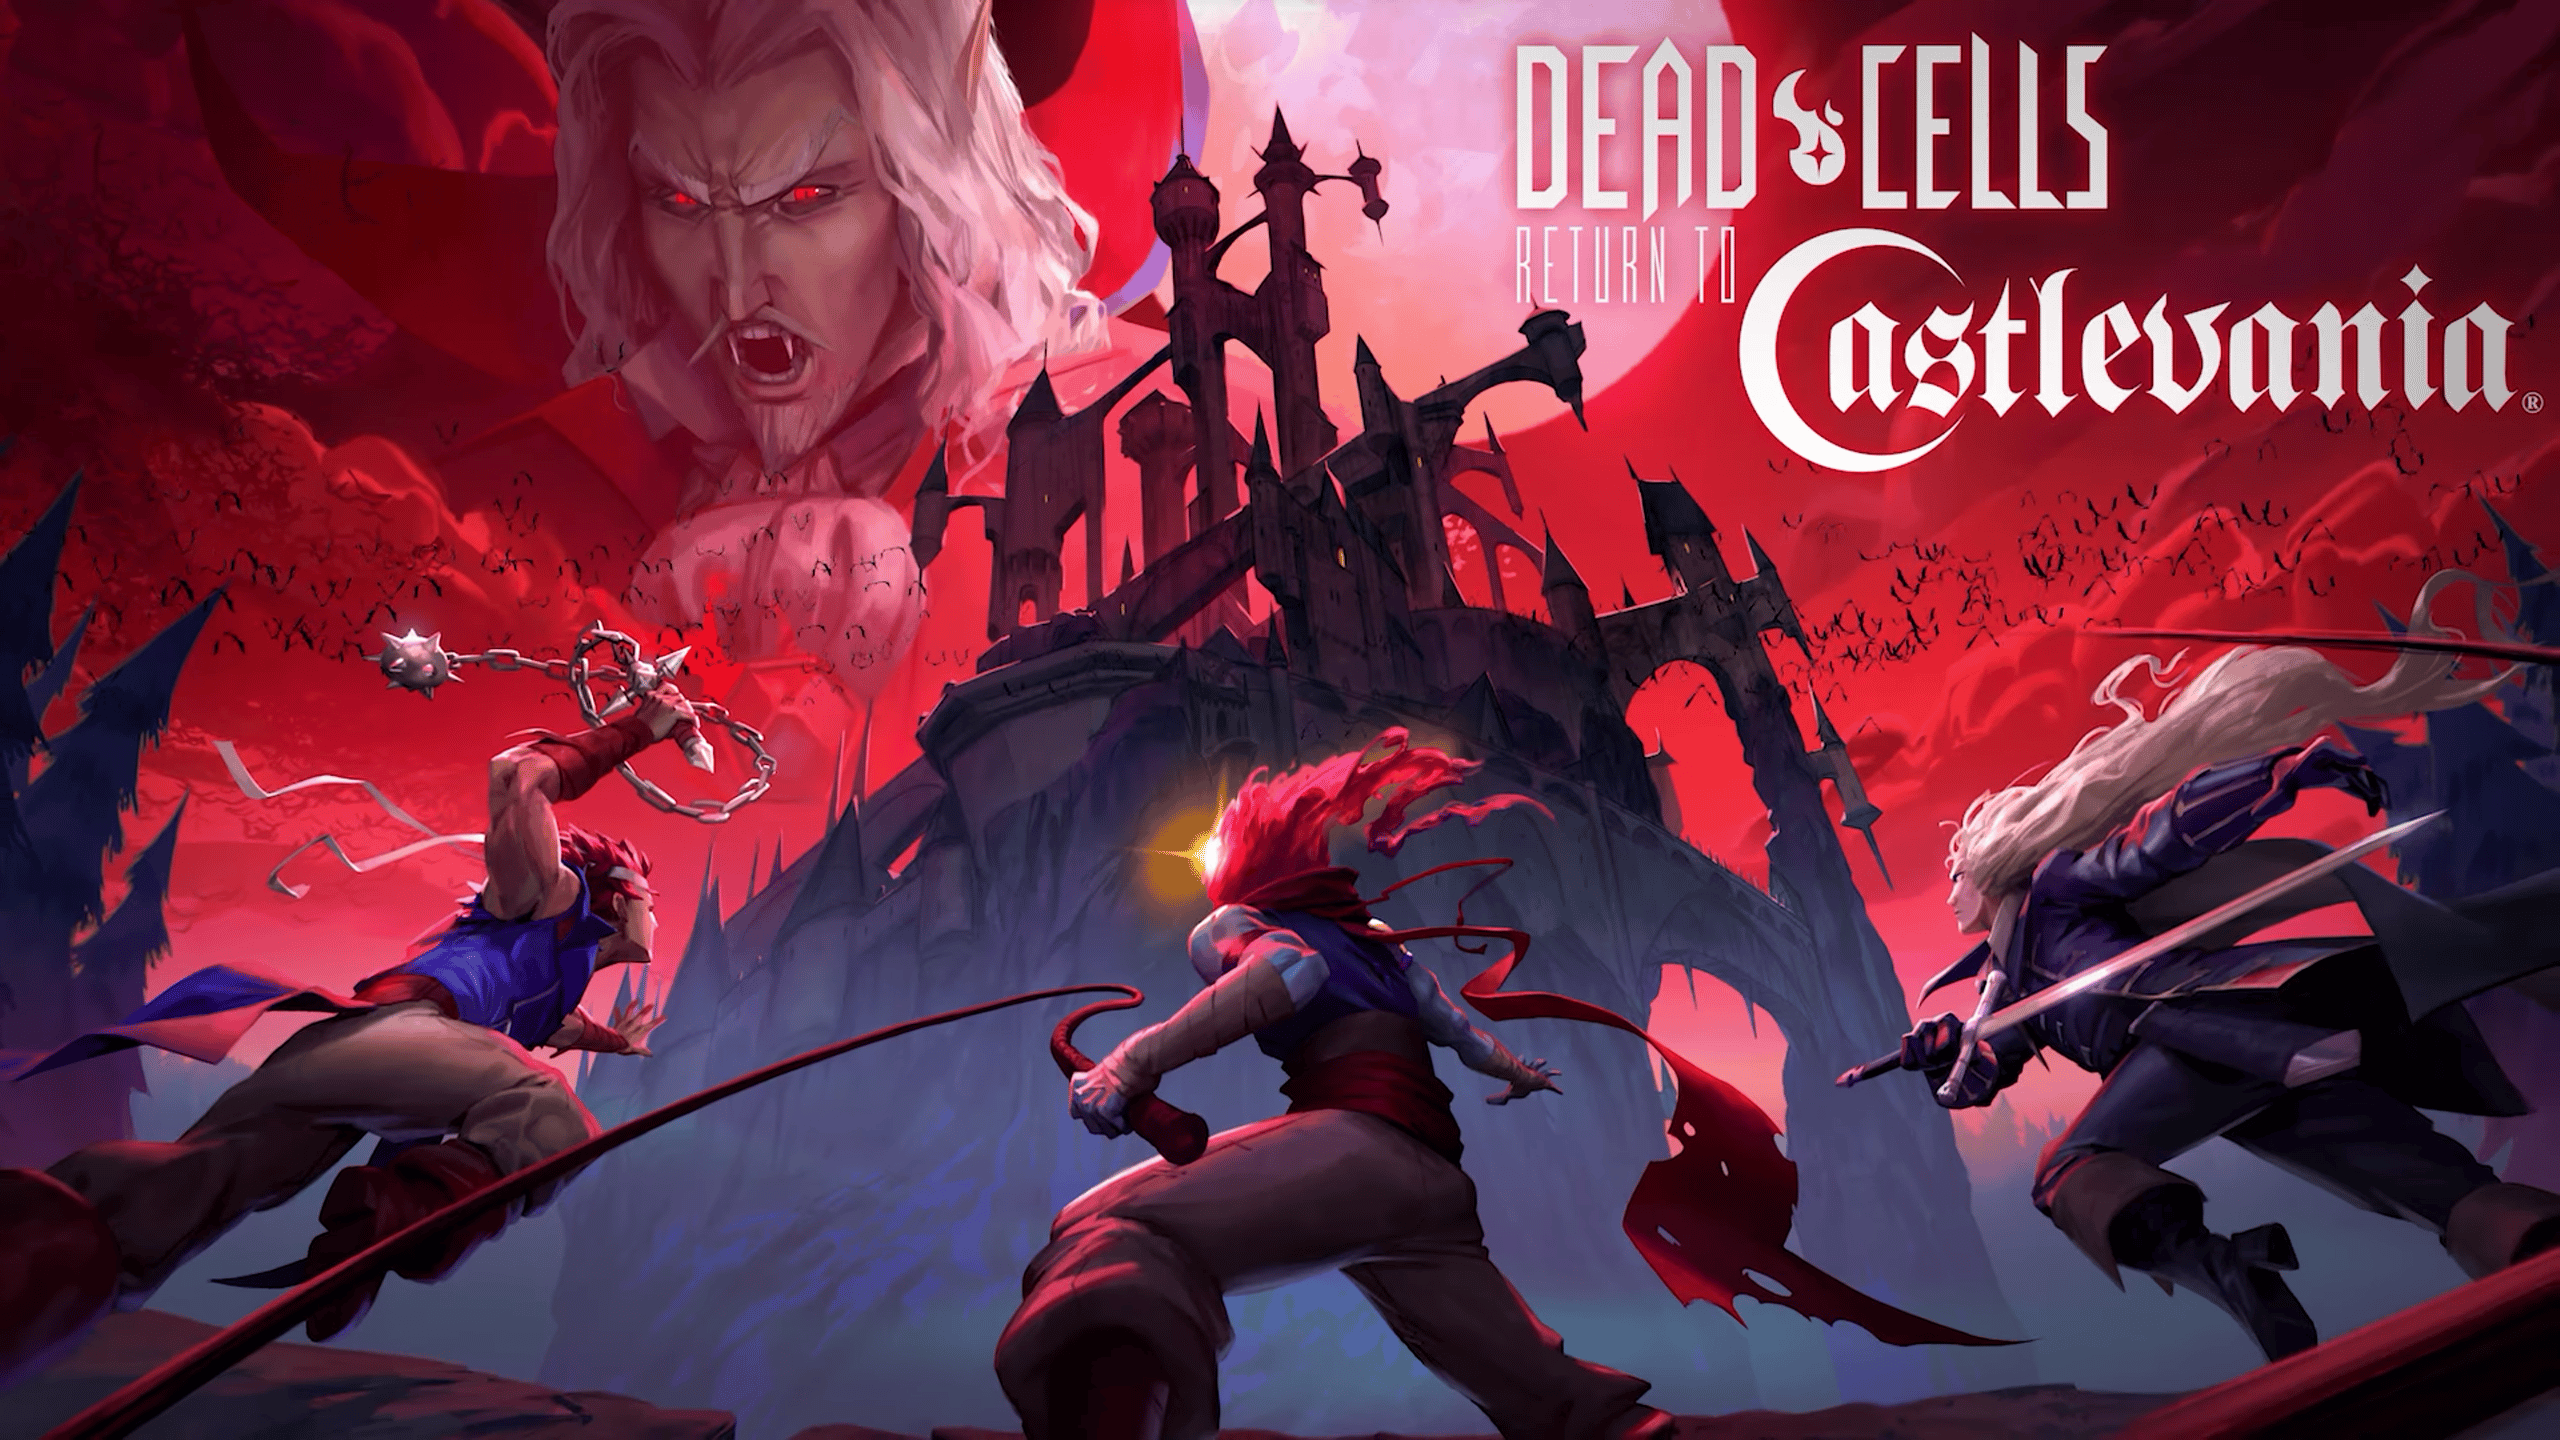 Dead Cells Return to Castlevania Release Date